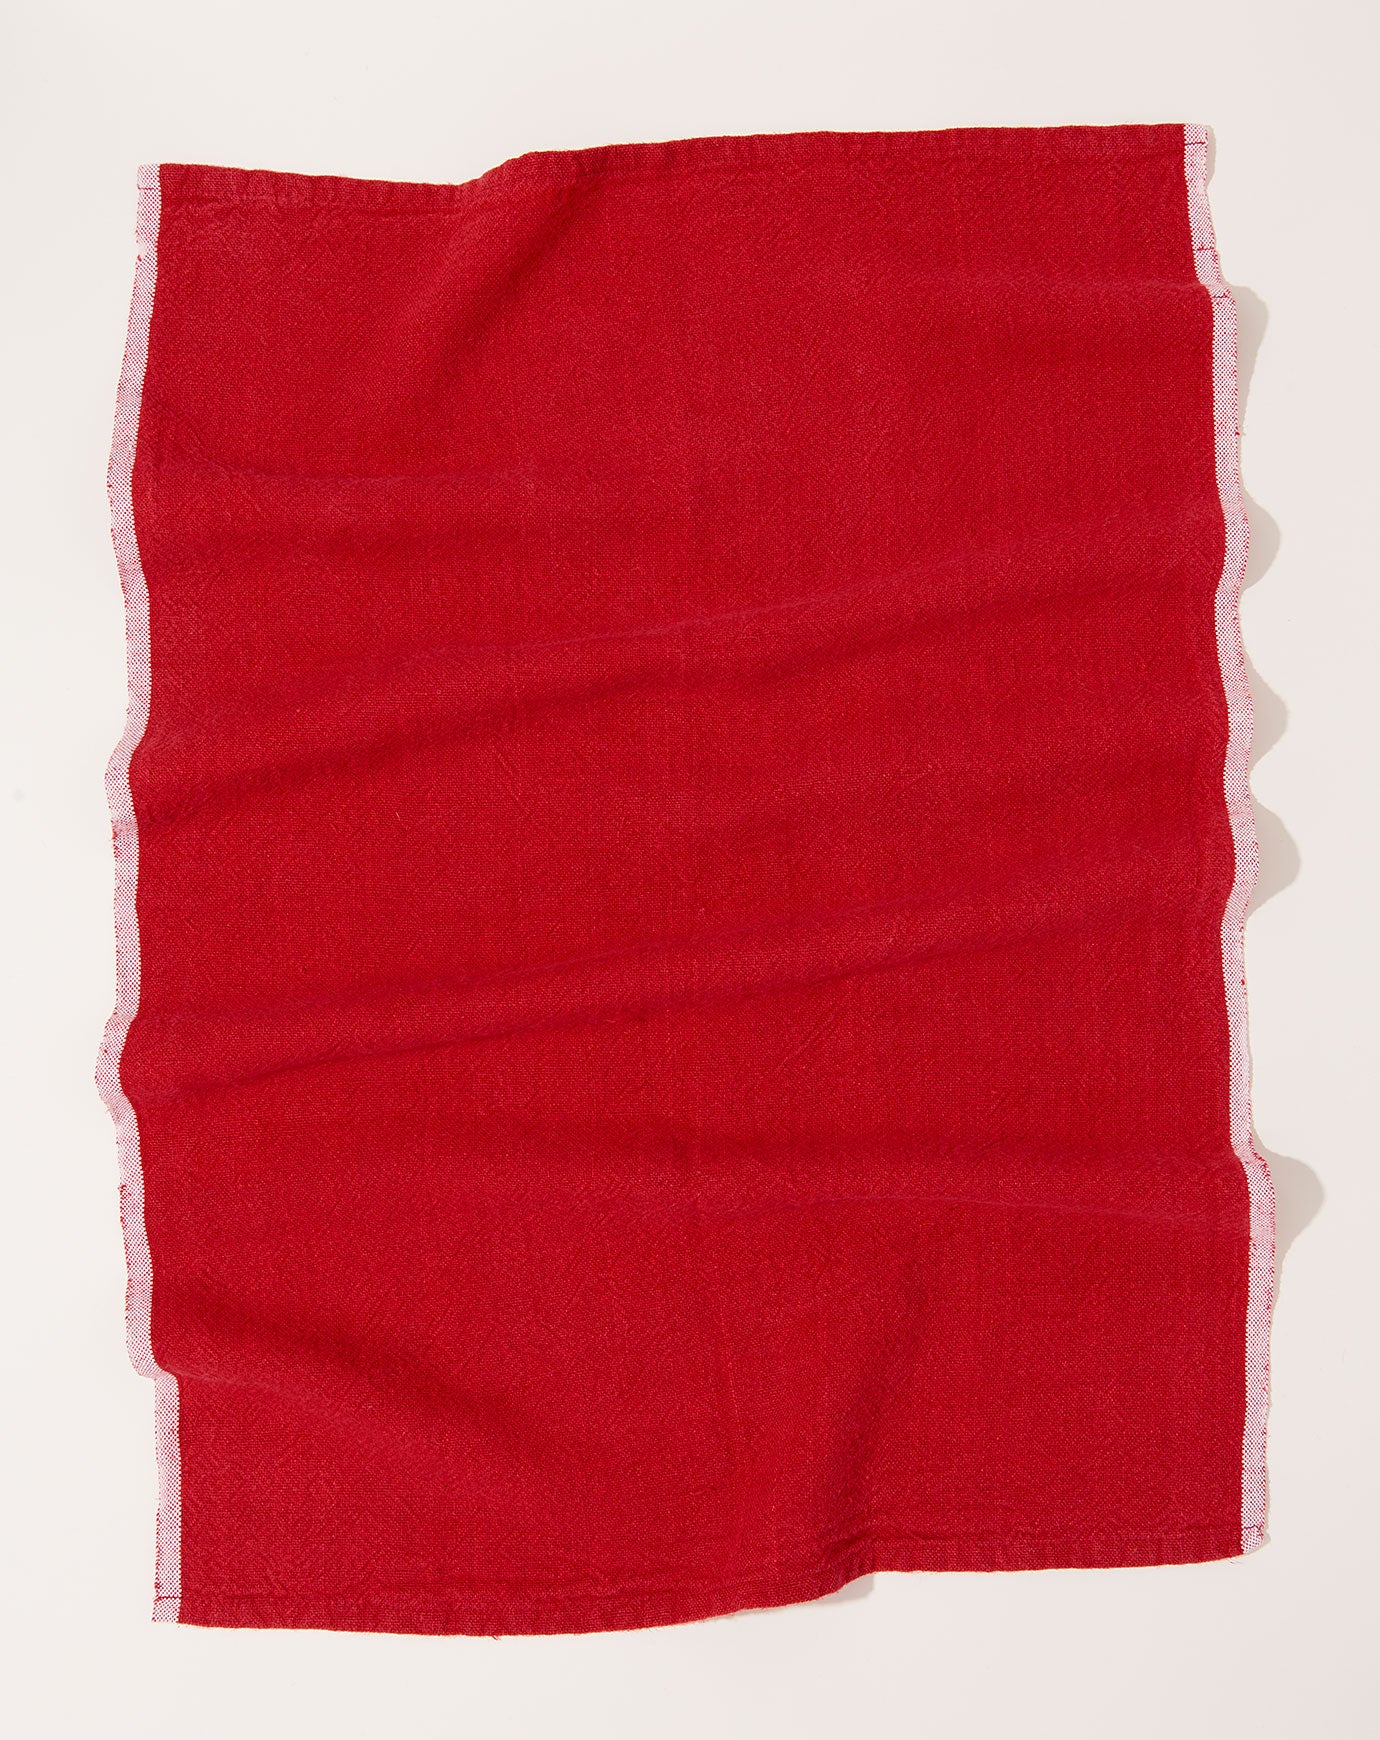 Caravan Chunky Linen Towels in Red, Set of 2